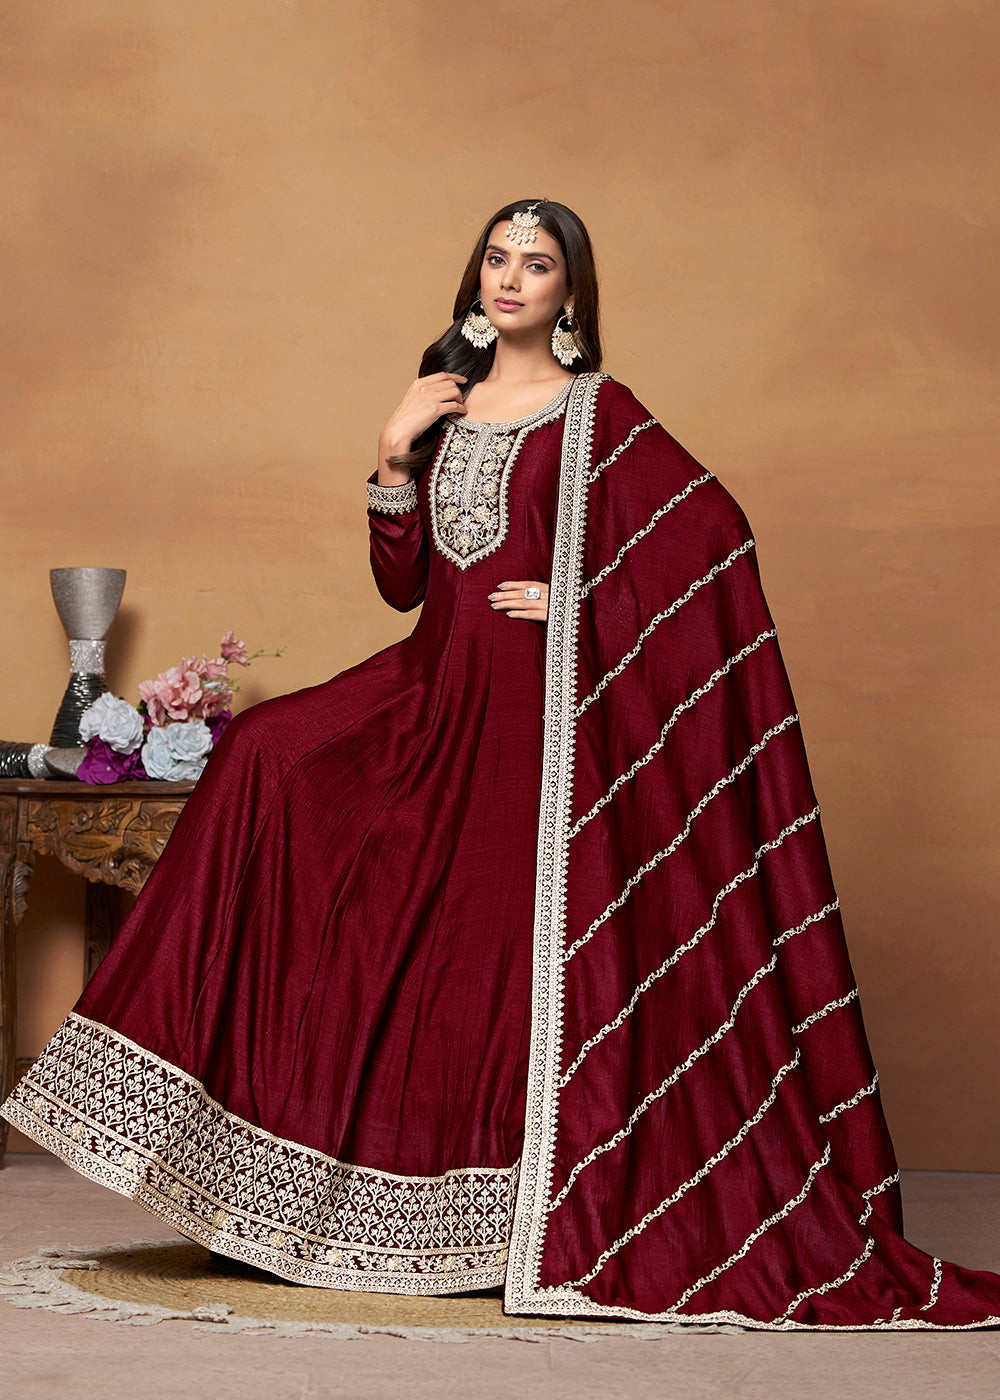 Buy Now Amazing Art Silk Maroon Embroidered Festive Anarkali Suit Online in USA, UK, Australia, New Zealand, Canada & Worldwide at Empress Clothing. 